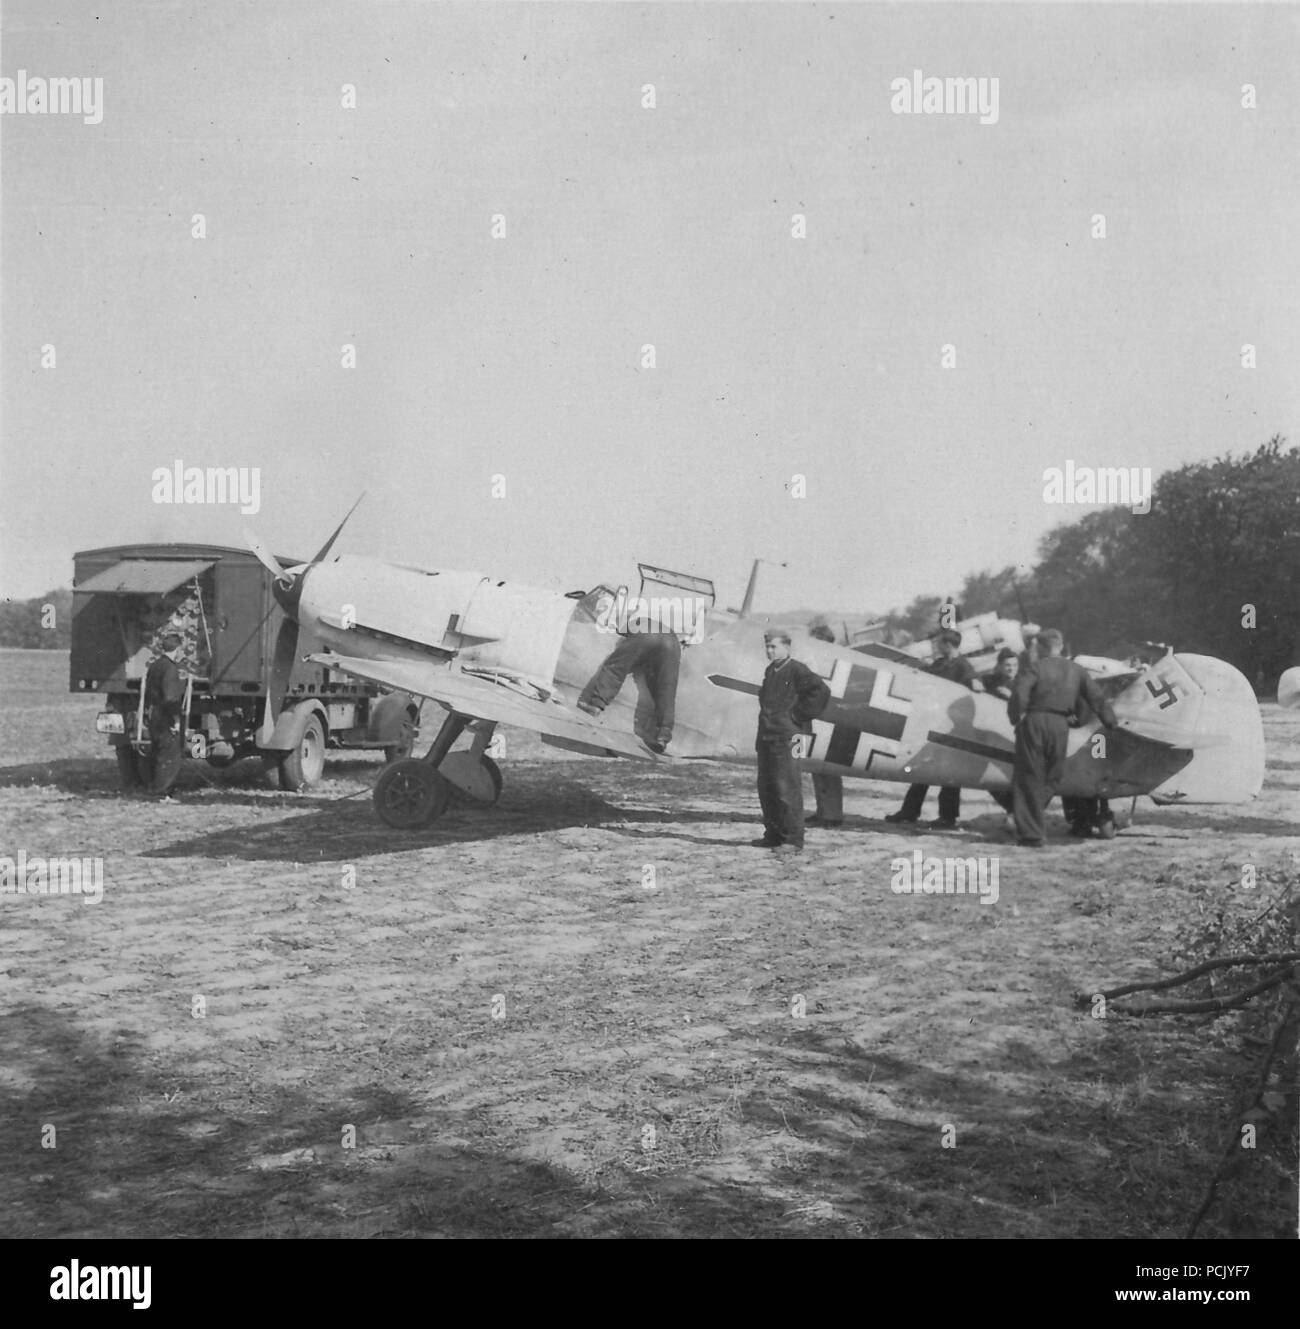 Image à partir d'un album de photos relatives à II. Gruppe, Jagdgeschwader 3 : le Messerschmitt Bf 109E de l'Oberleutnant von Cramon, Geschwaderadjutant Friedrich-Franz JG3 du 21 août 1940, est prêt pour l'action. Banque D'Images